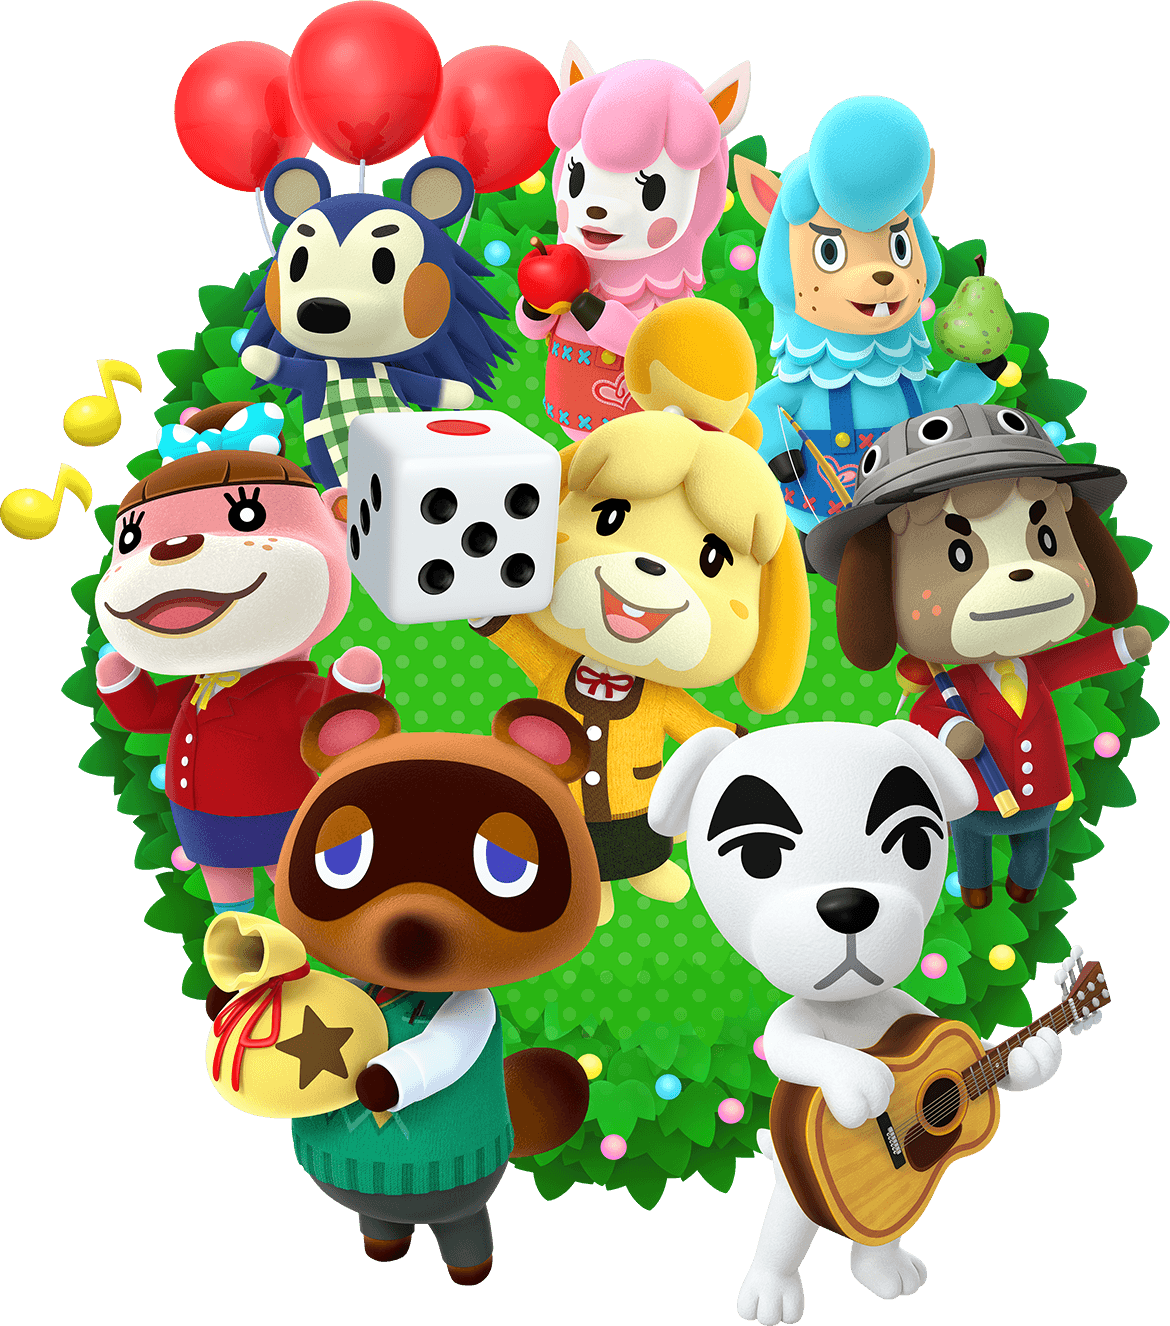 Animal Crossing: City Folk